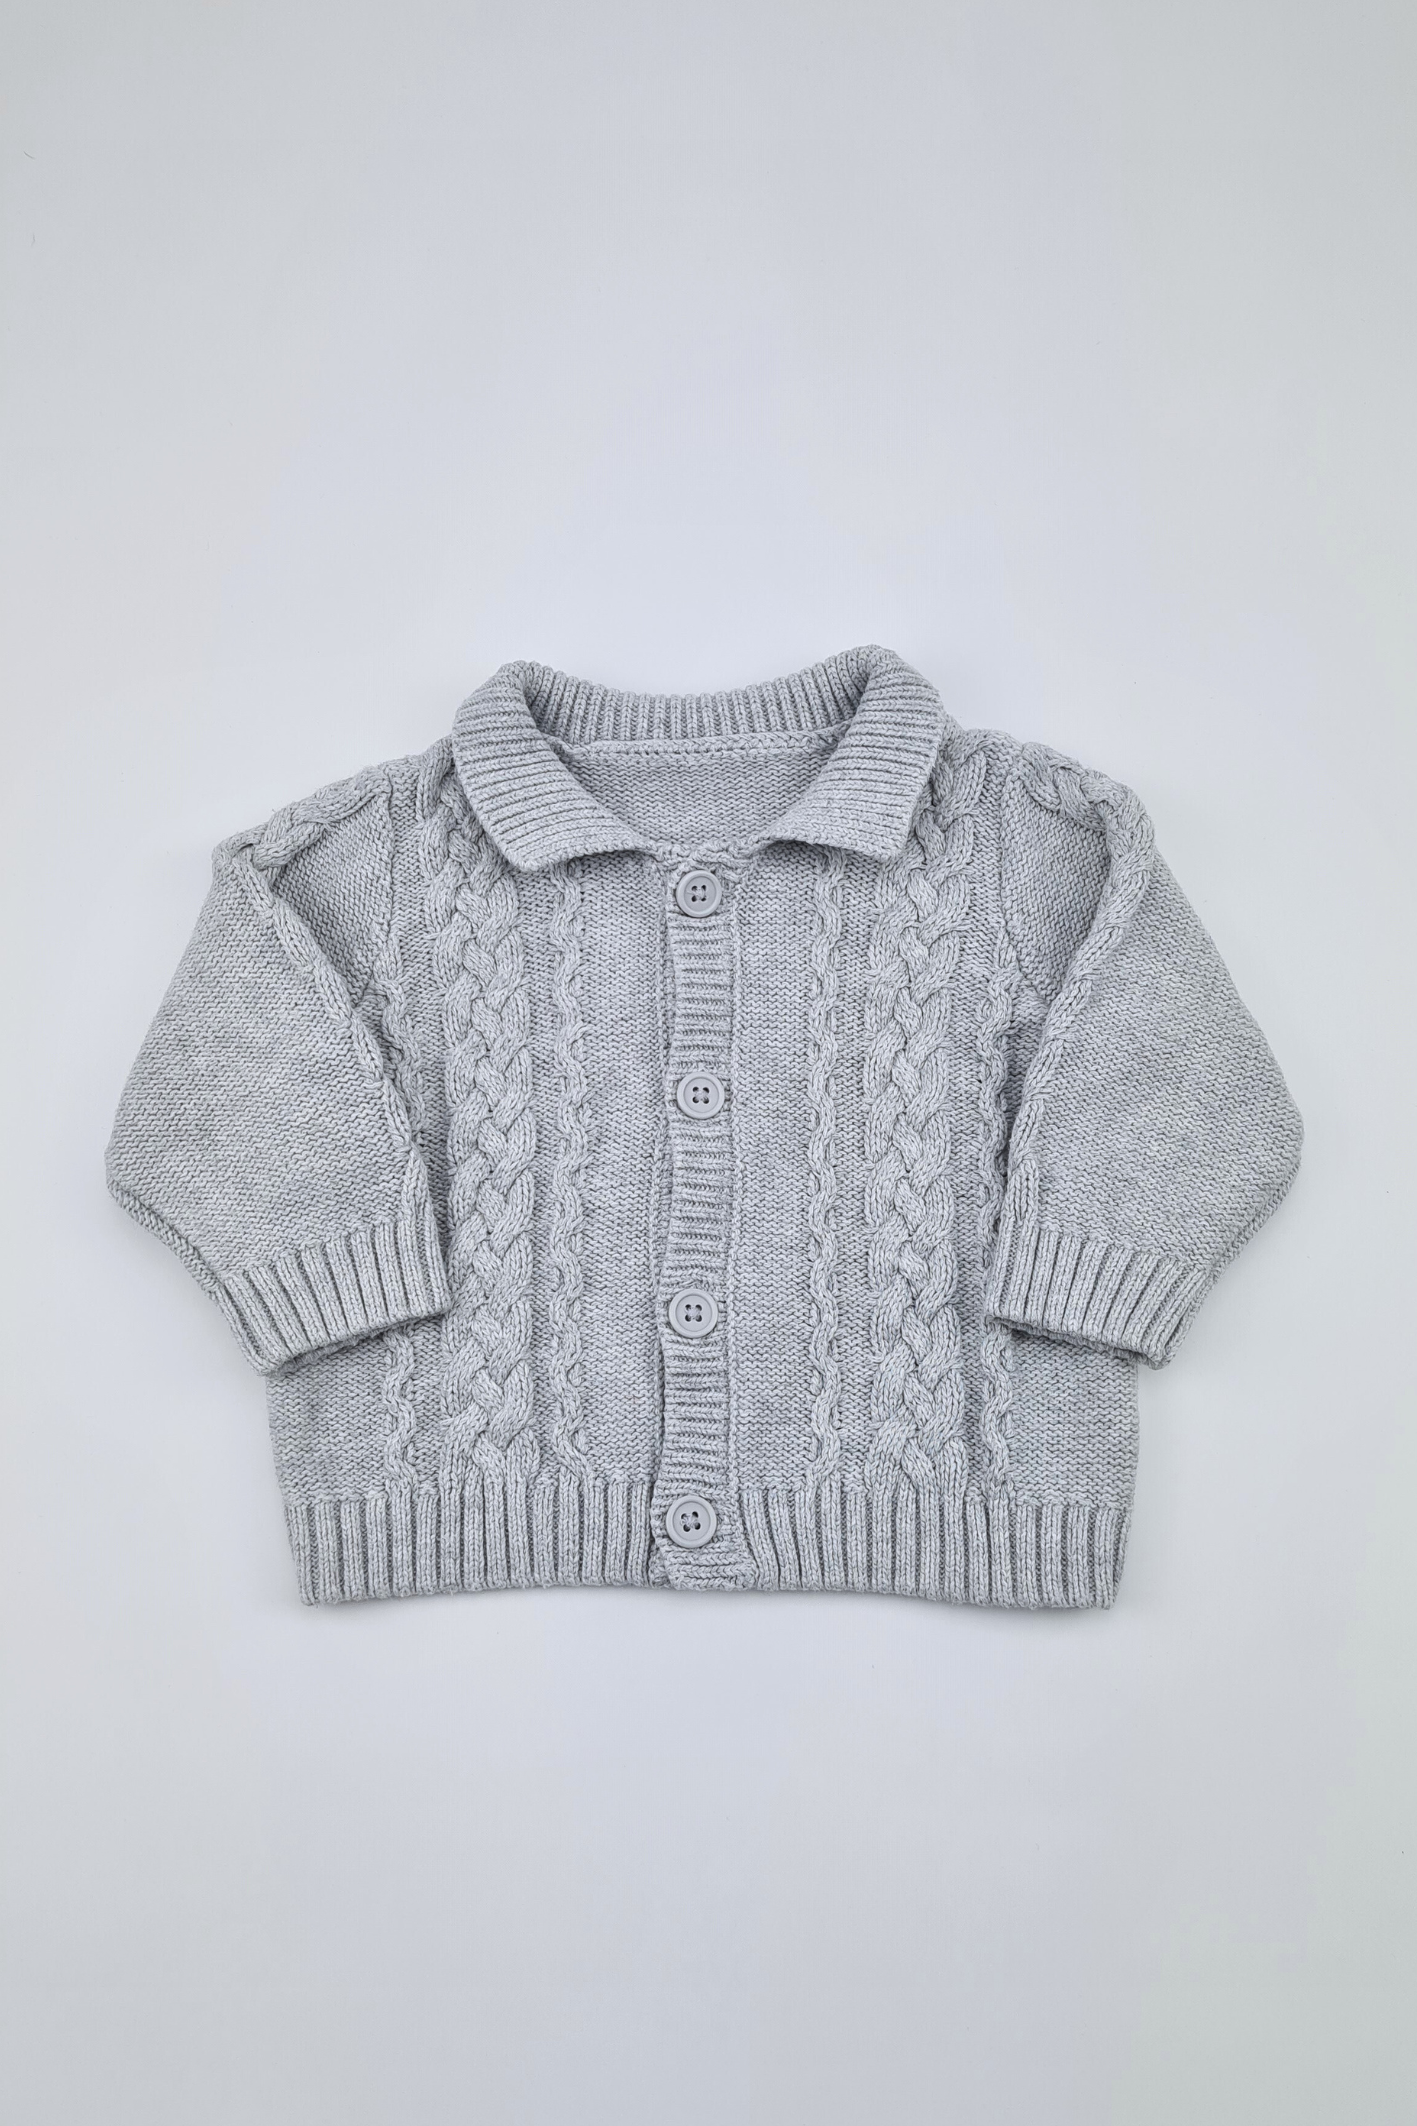 0-3m - Grey Knitted Cardigan (Matalan)